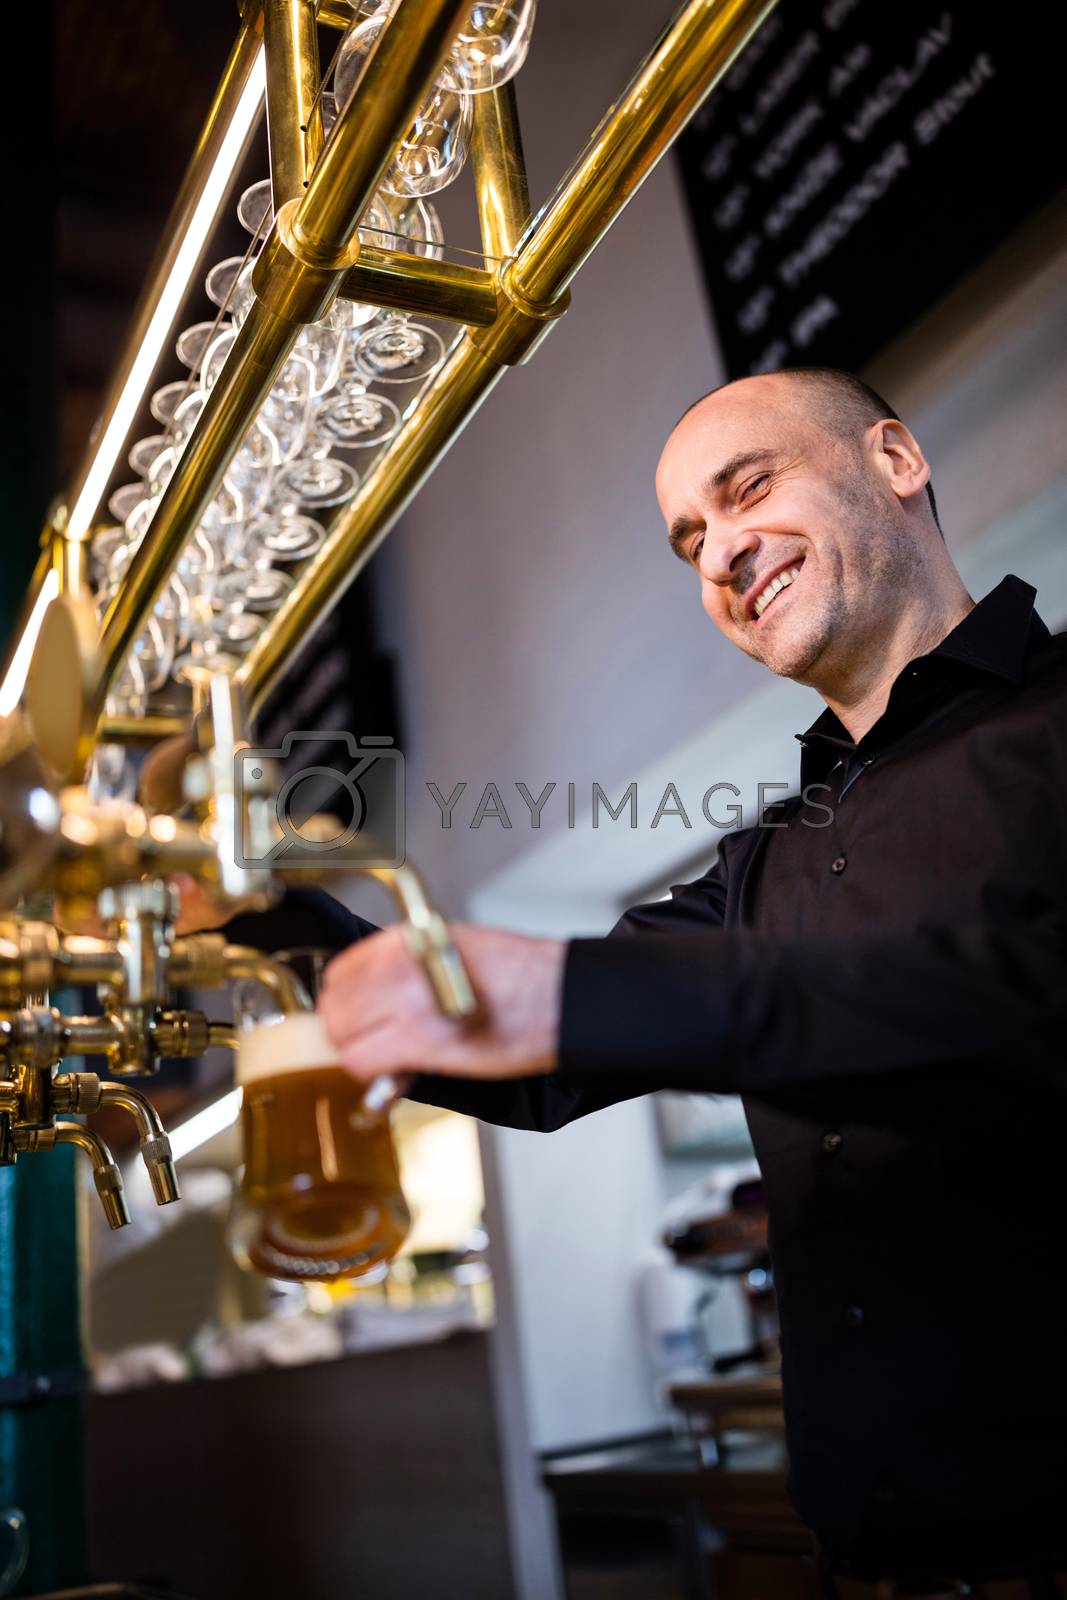 Royalty free image of Brewer filling beer in beer glass from beer pump by Wavebreakmedia